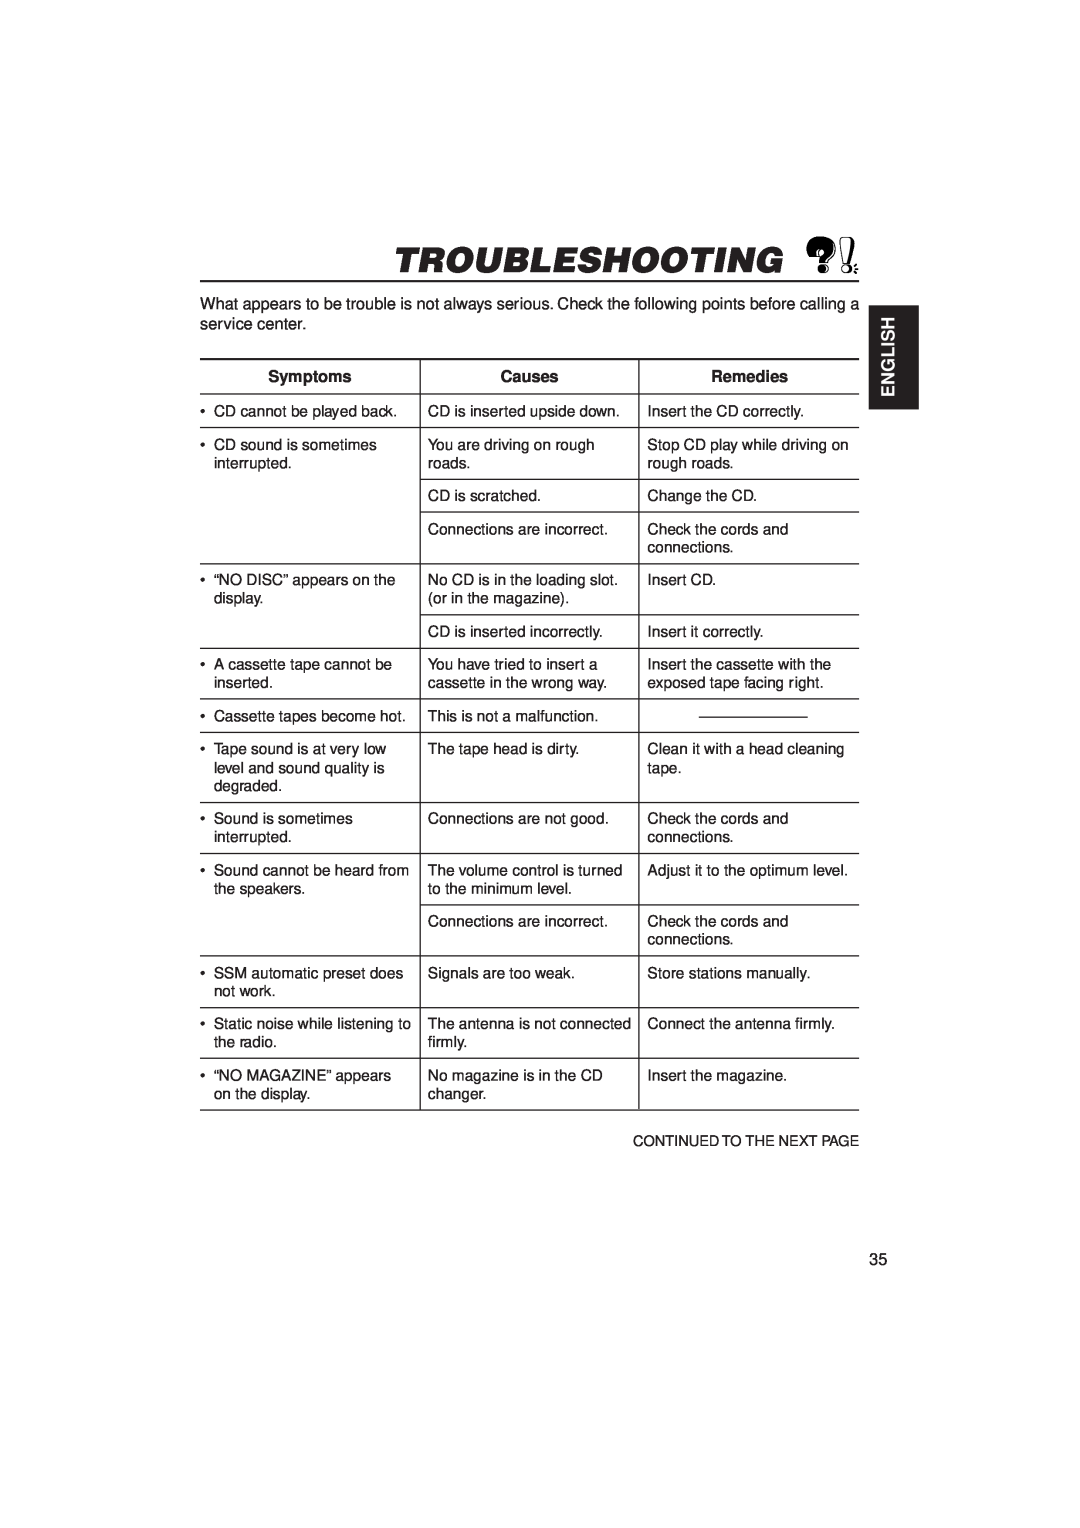 JVC KW-XC770 manual Troubleshooting, English, Symptoms, Causes, Remedies 